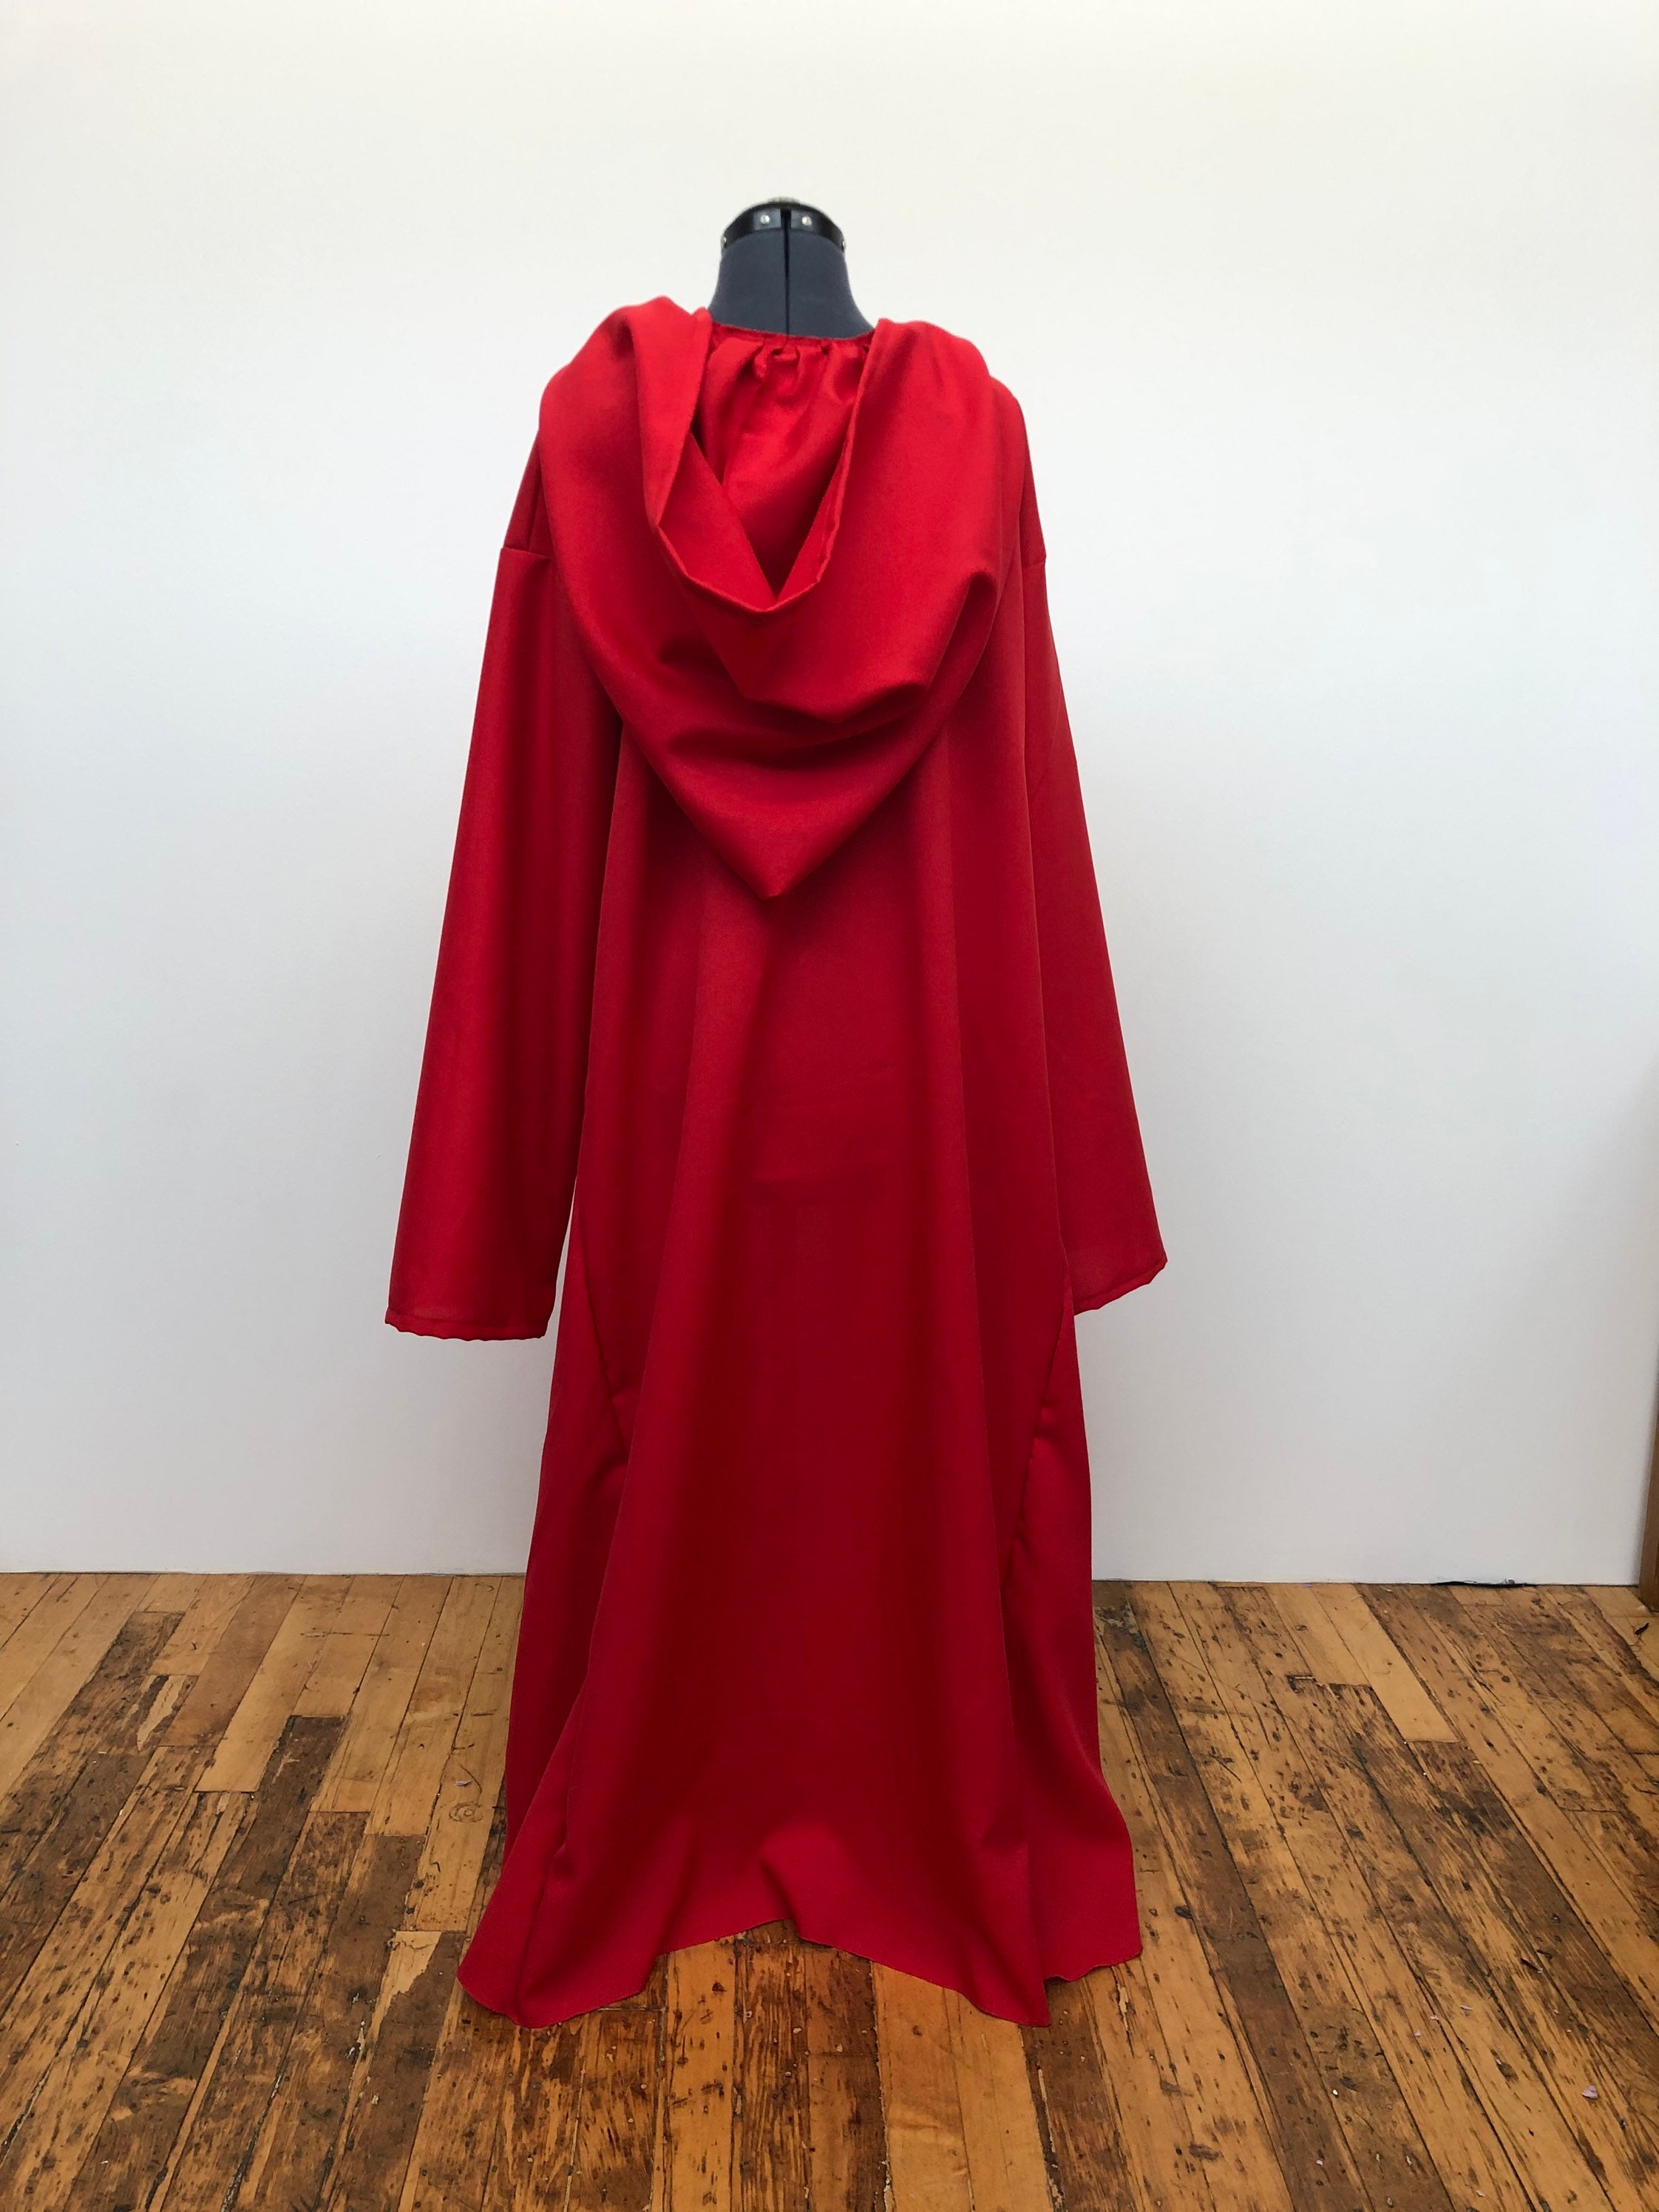 Hooded Red Robe IPRE Wizard Uniform Custom Sizing | Etsy